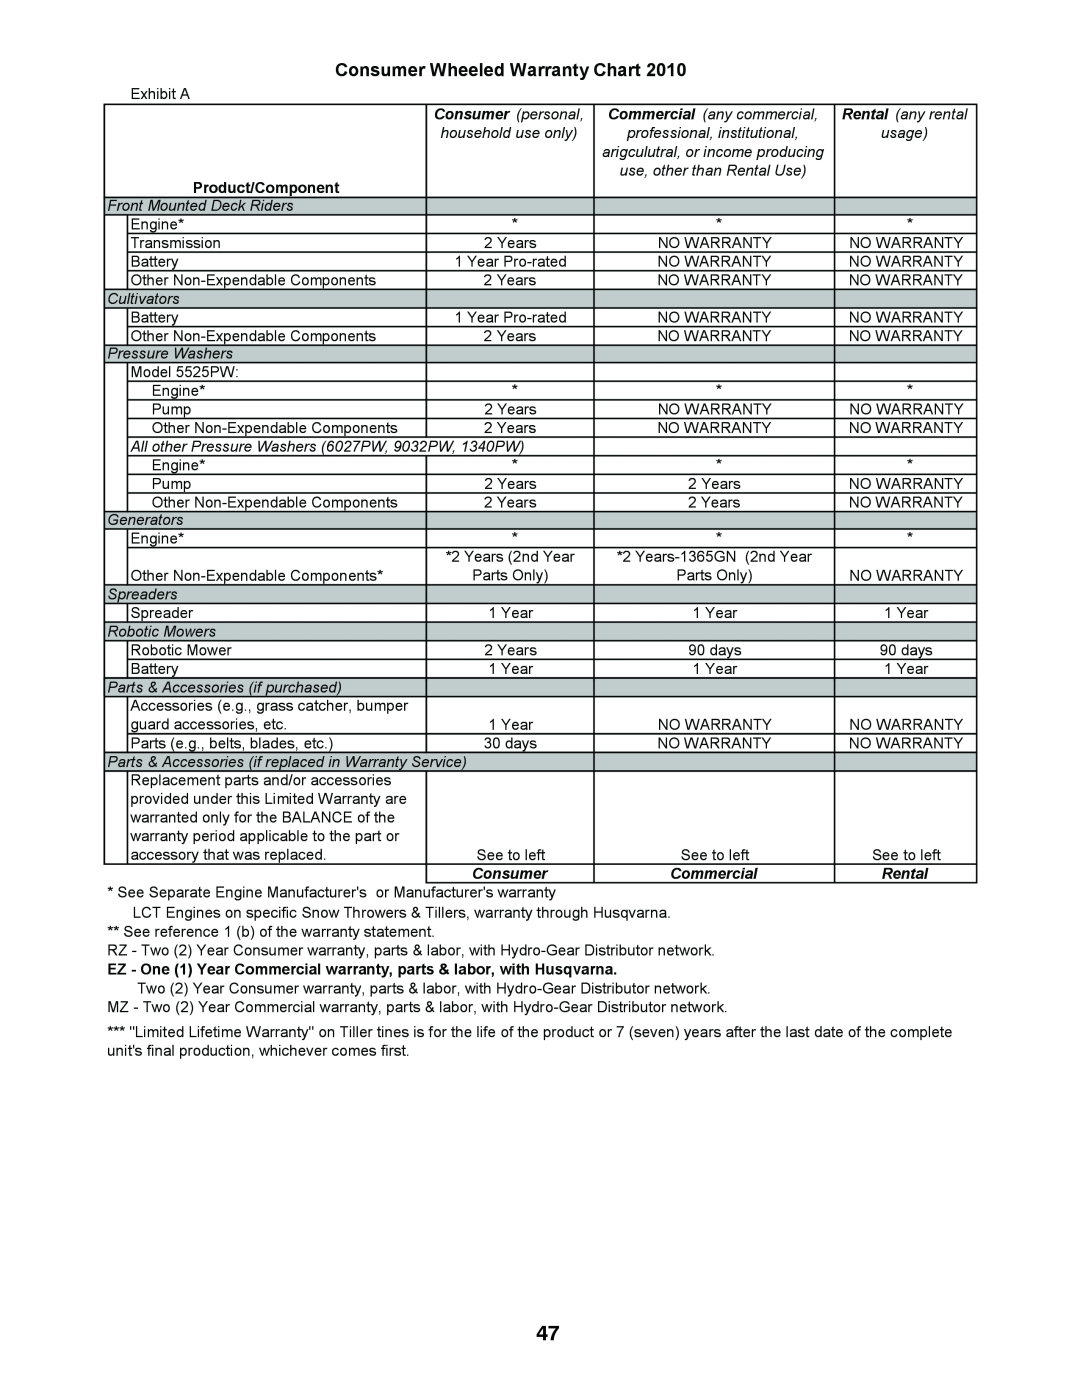 Husqvarna LGT24K54 owner manual Consumer Wheeled Warranty Chart, Product/Component 